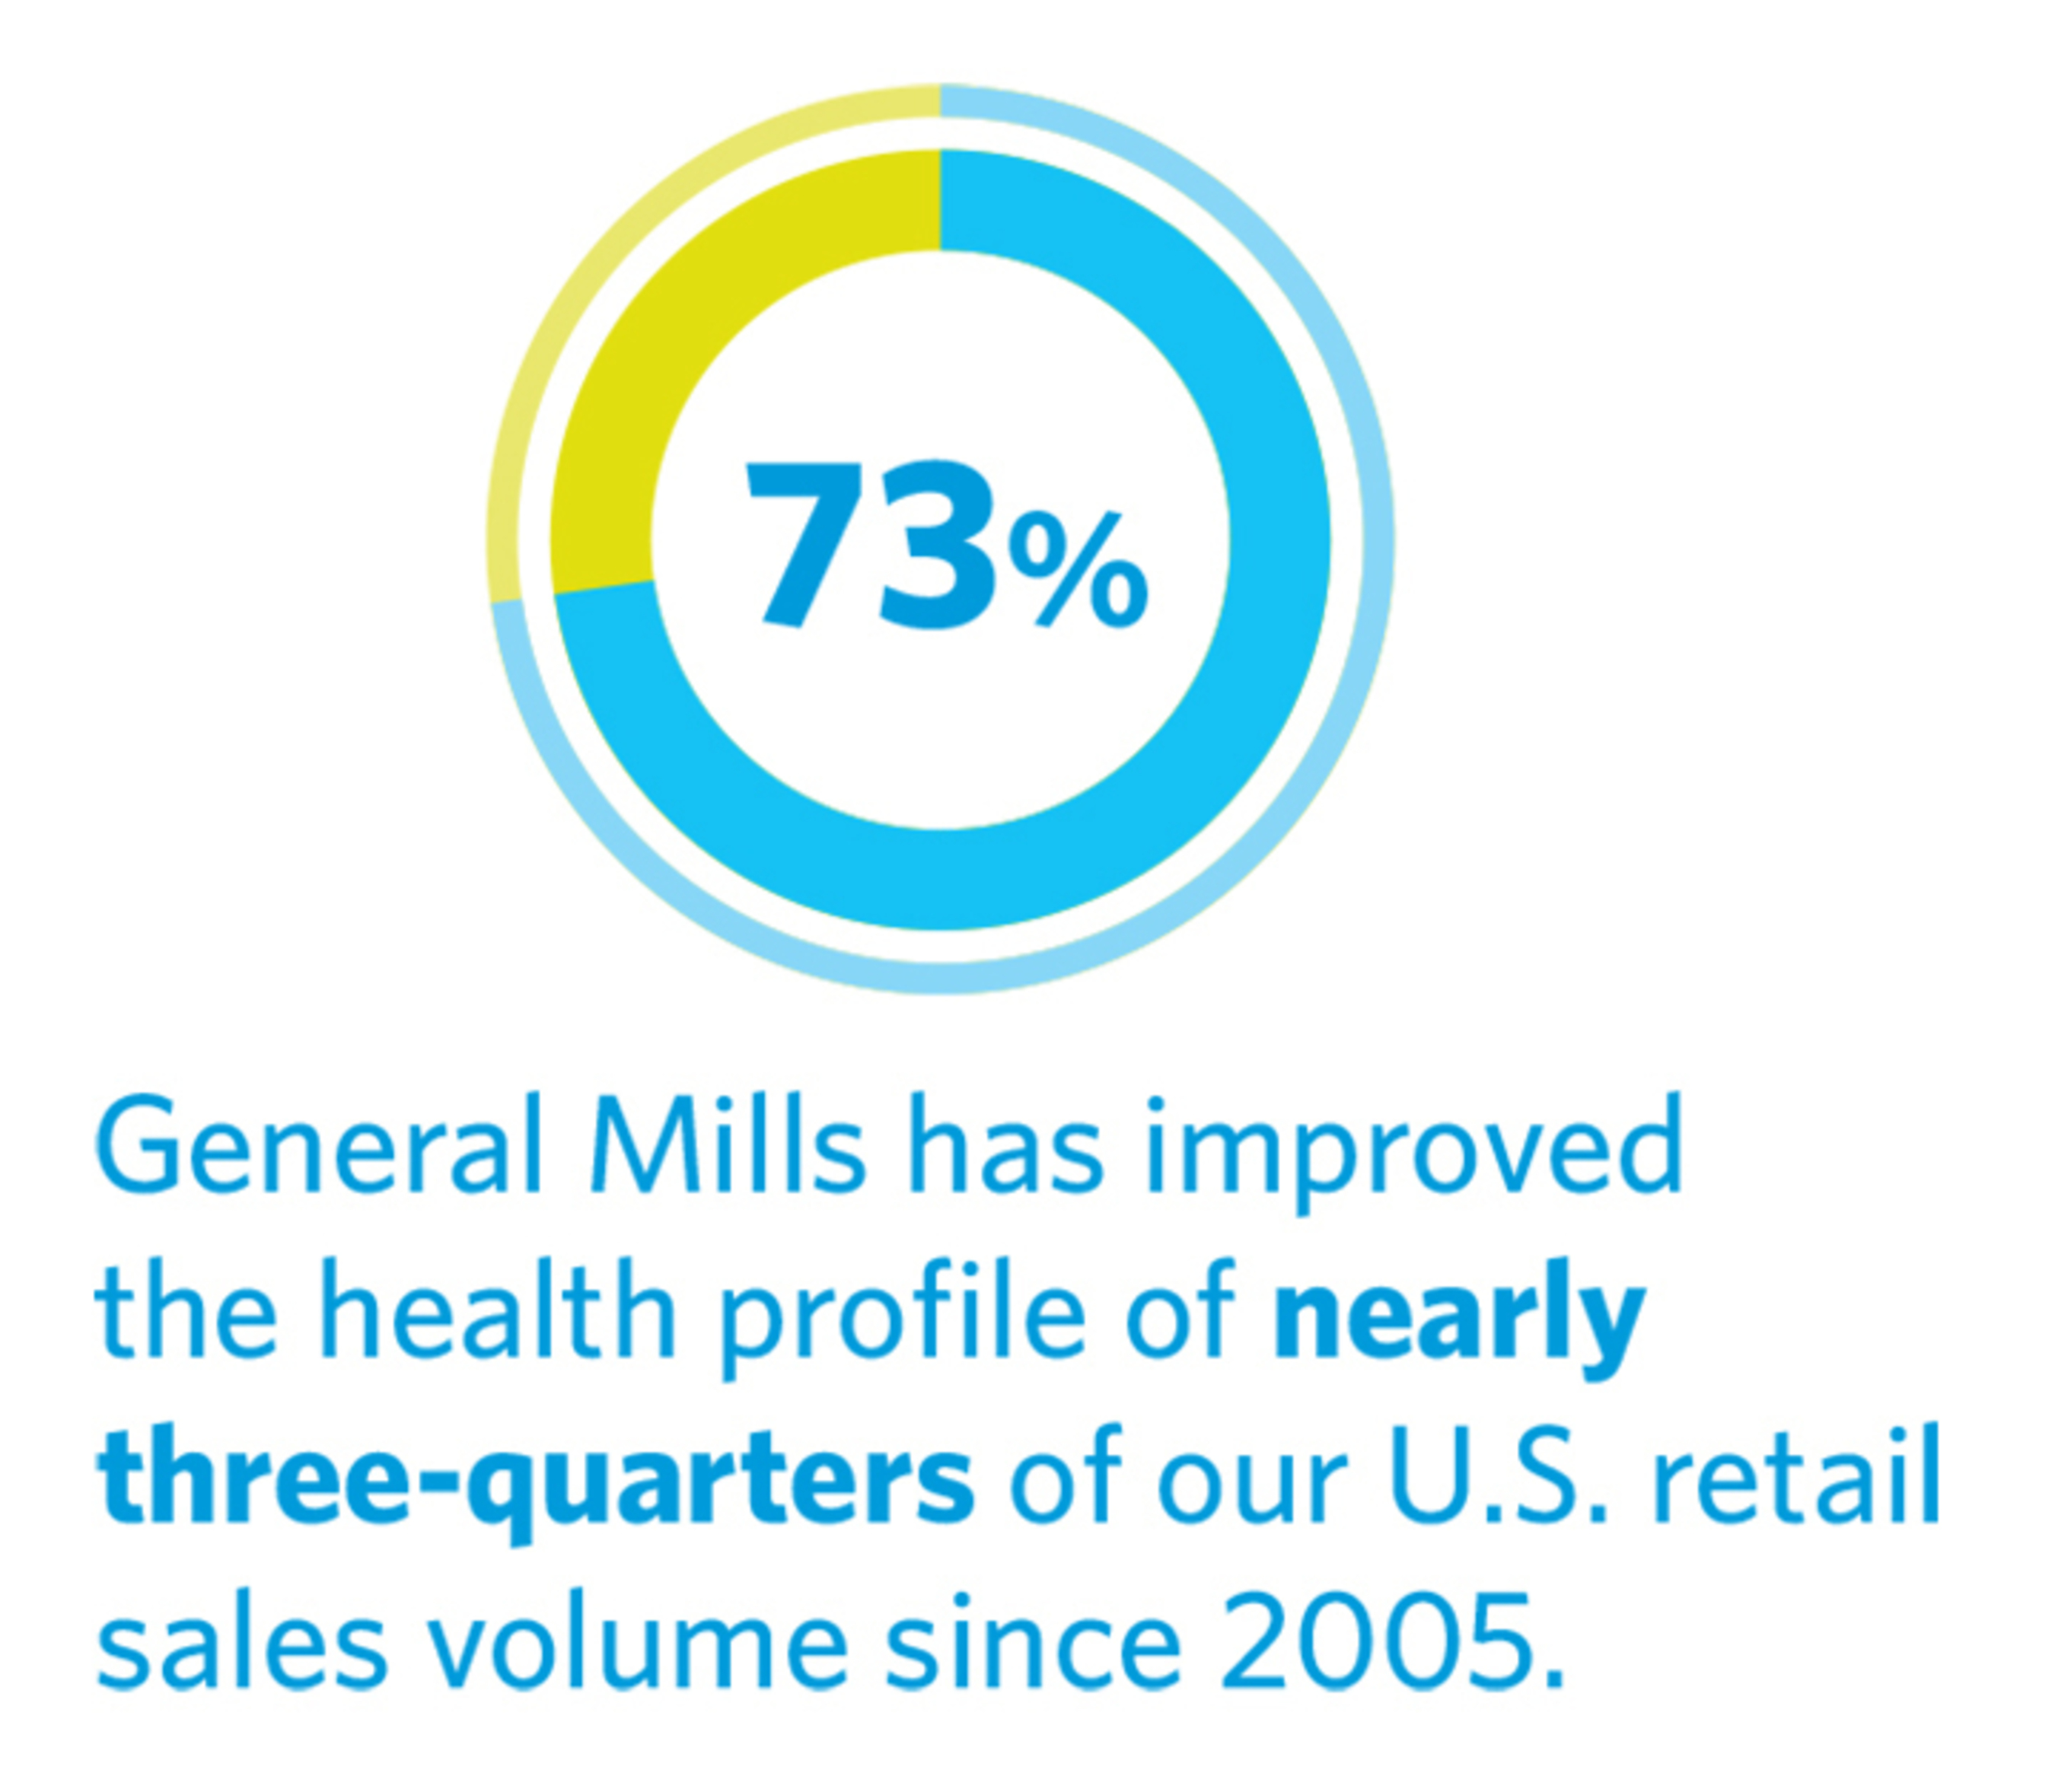 General Mills has improved the health profile of 73 percent of its U.S. Retail sales volume since 2005. (PRNewsFoto/General Mills)